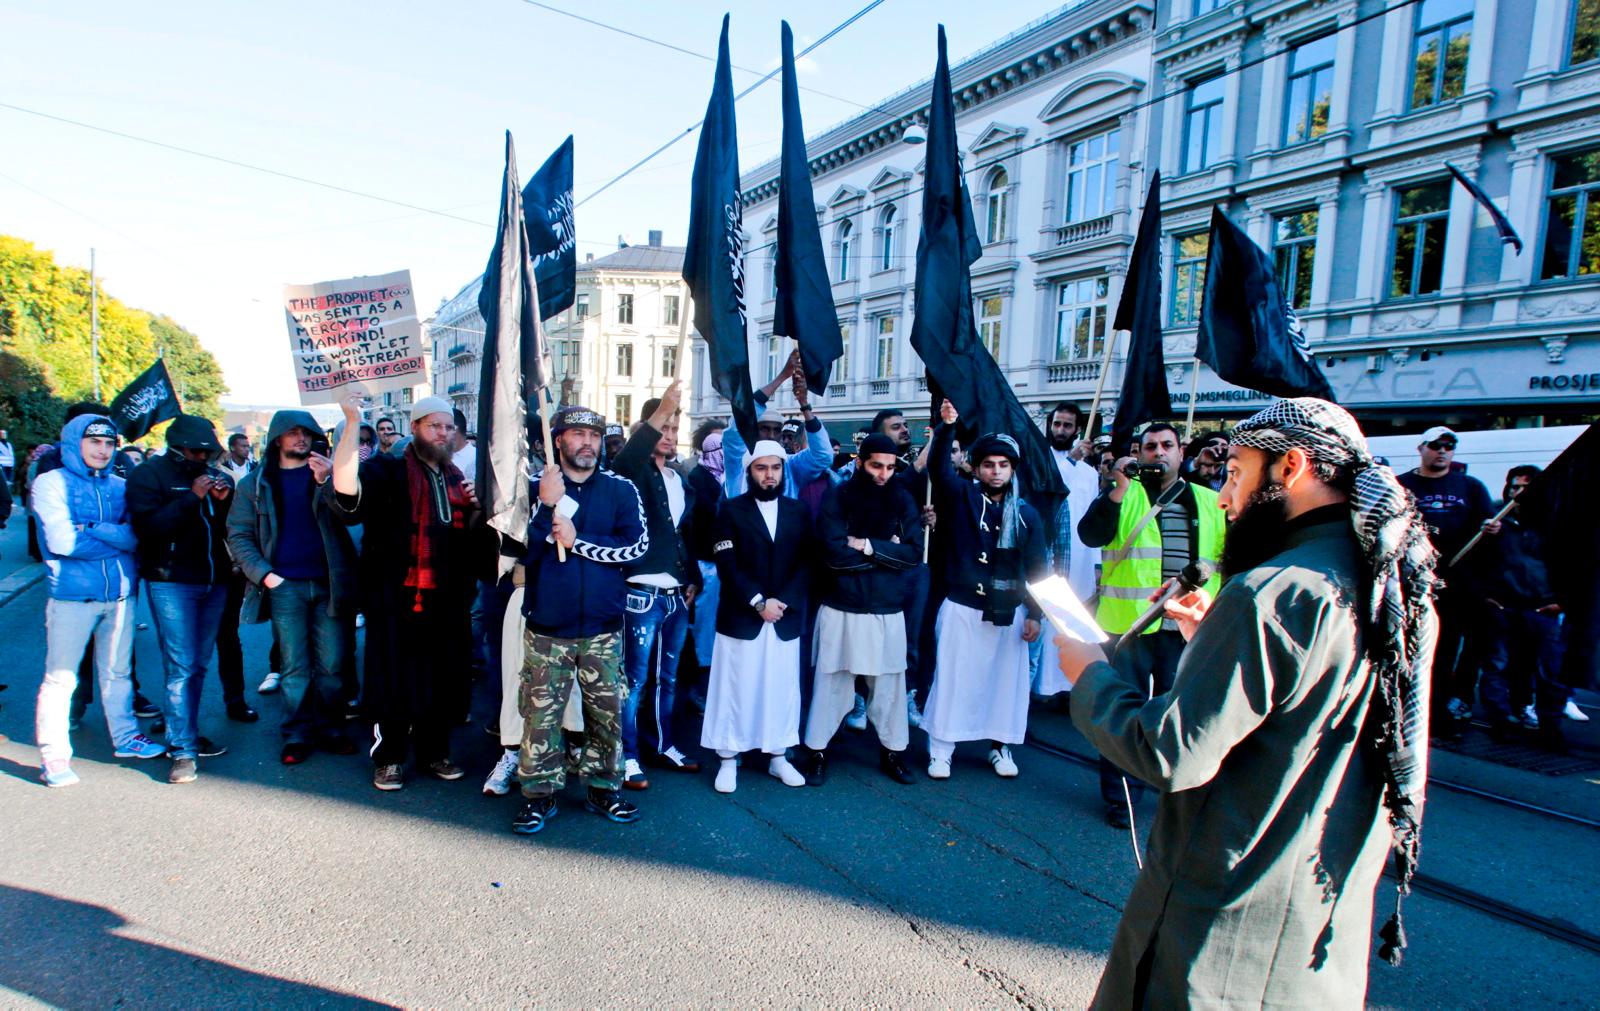 Høsten 2012 skapte en anti-islam film sinne blant en del muslimer. Profetens Ummah arrangerte en demonstrasjon foran den amerikanske ambassaden der de hyllet Osama bin Laden.